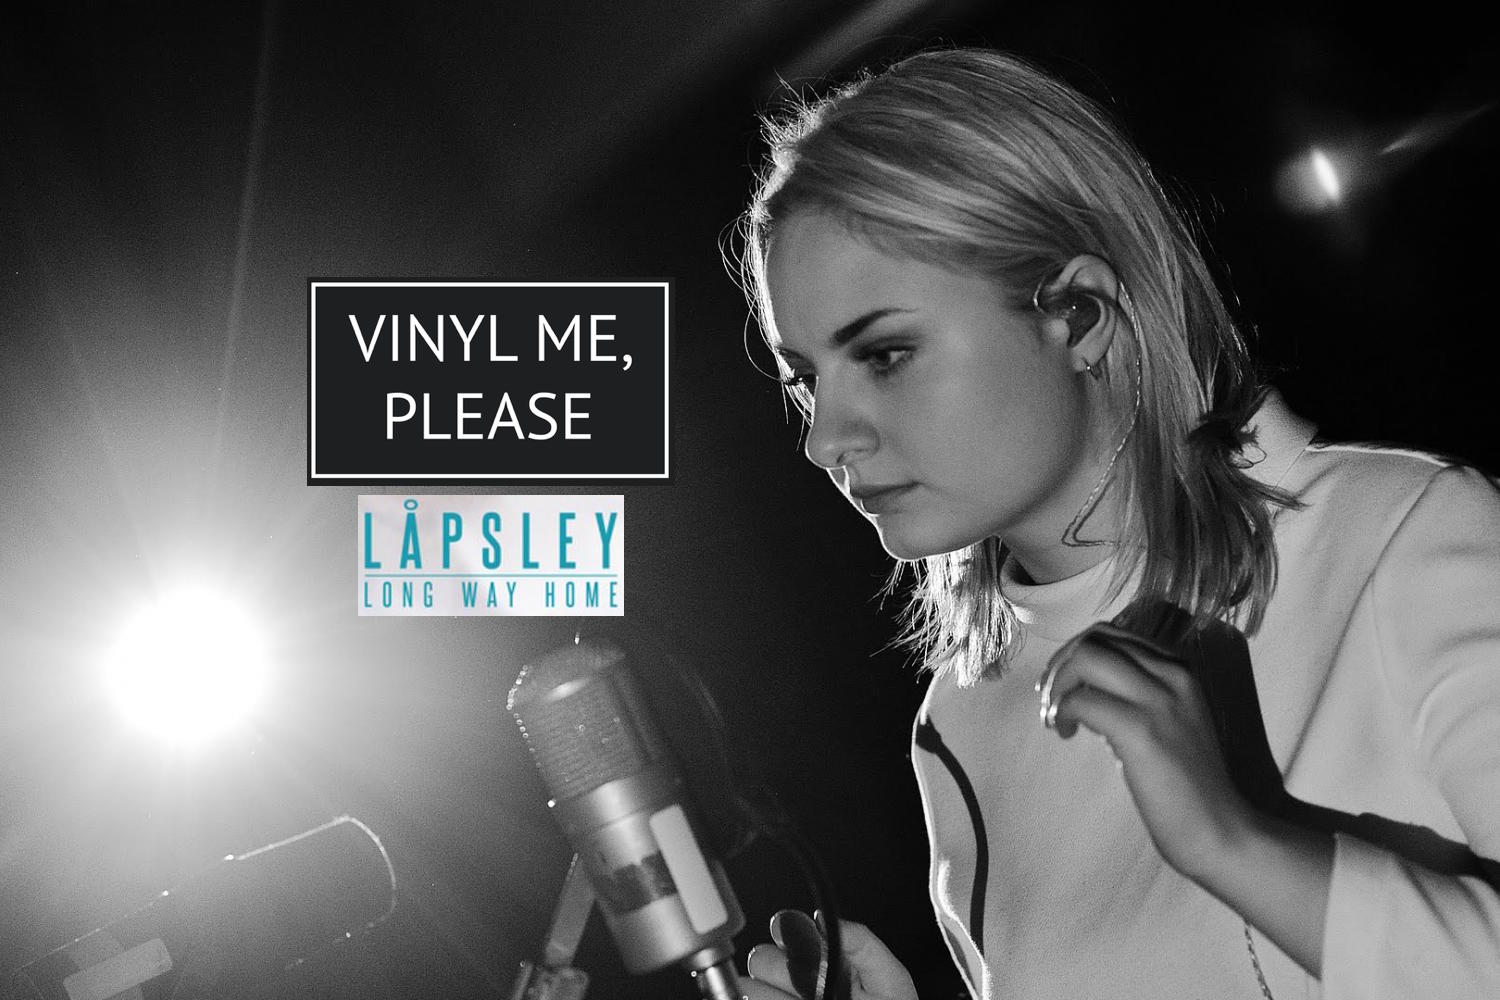 Vinyl me, please march edition: låpsley – long way home